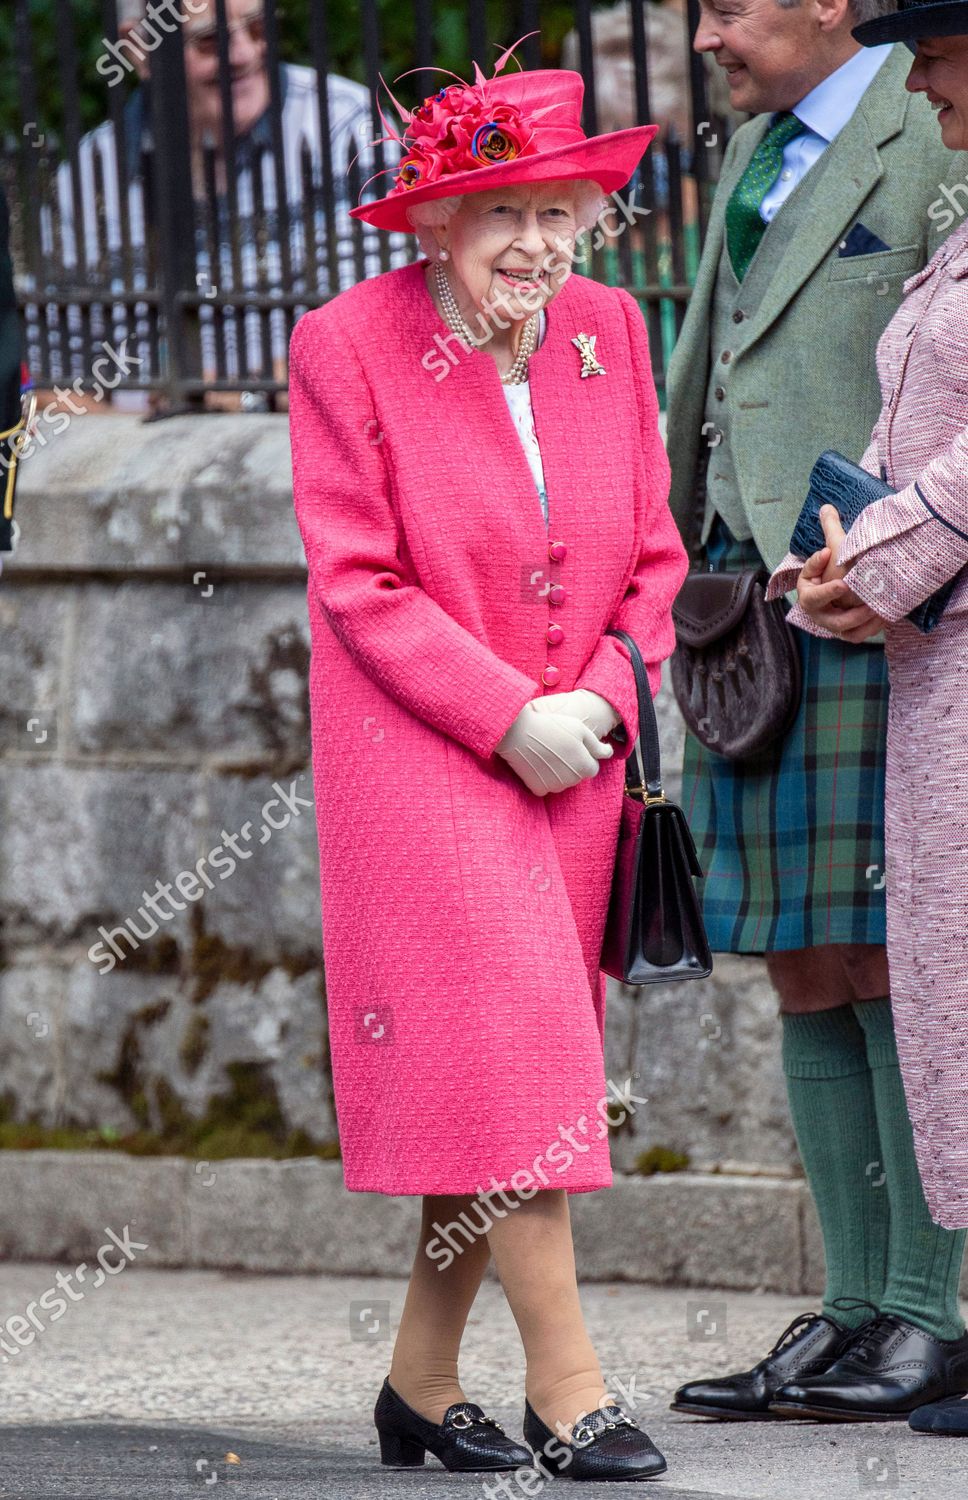 queen-elizabeth-ii-official-arrival-at-balmoral-castle-scotland-uk-shutterstock-editorial-12251974ae.jpg